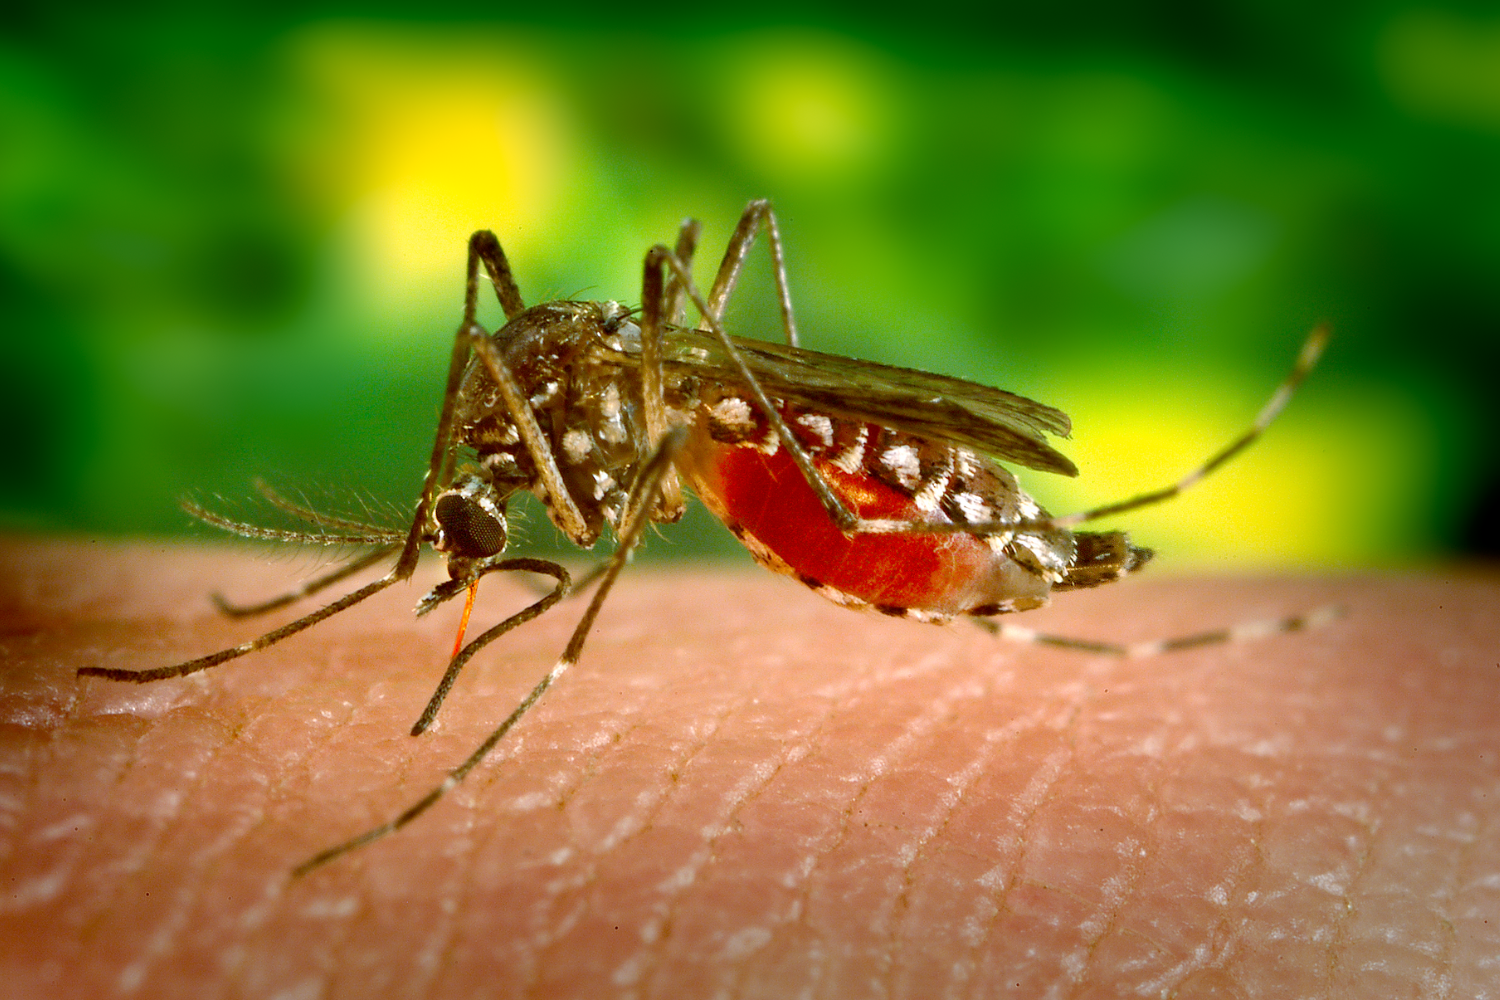 mosquito on skin feeding